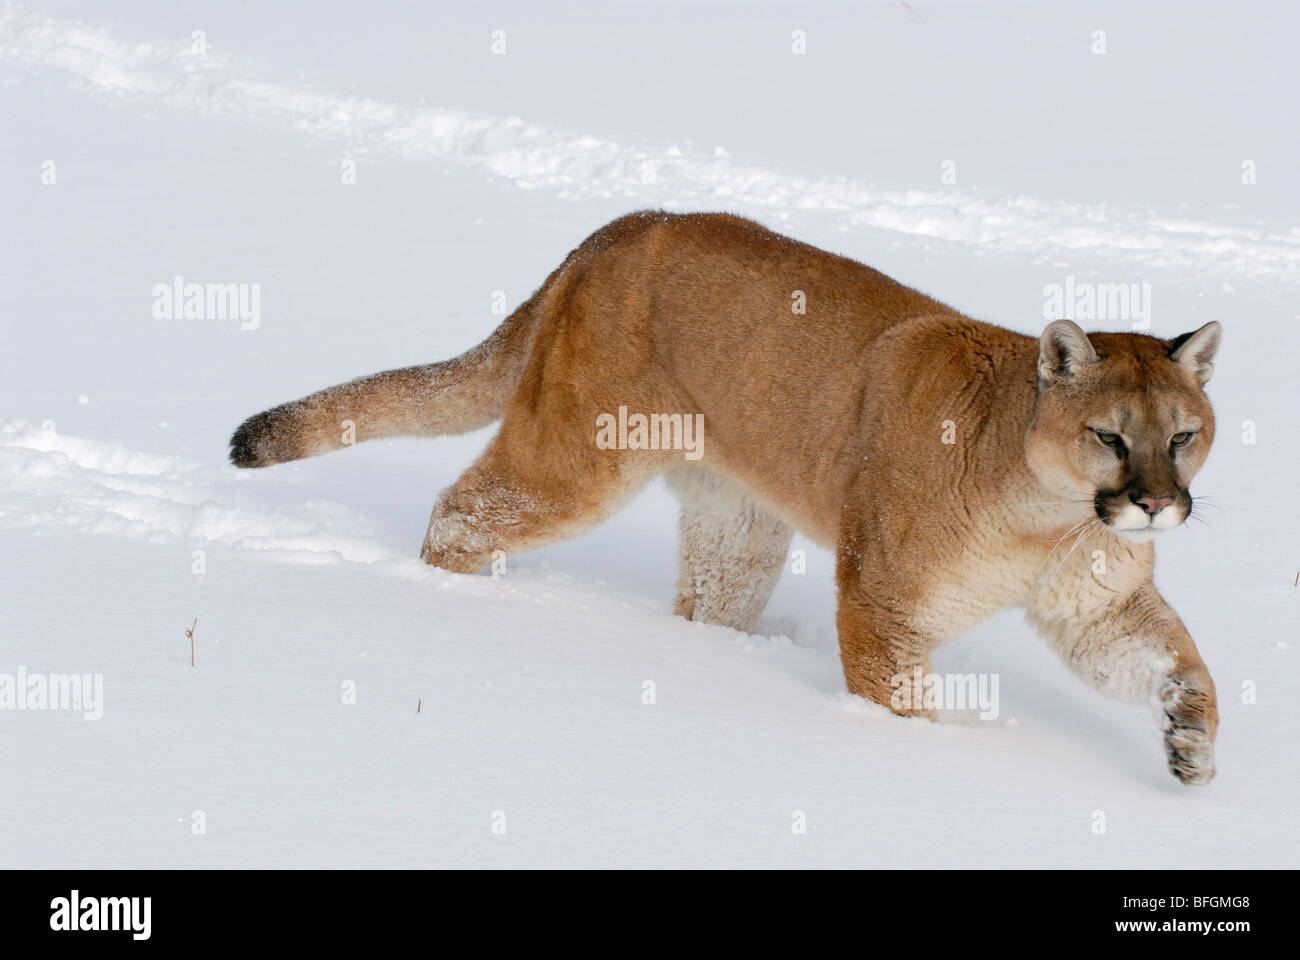 Mountain Lion (Puma concolor) walking through deep snow, Minnesota, USA Stock Photo